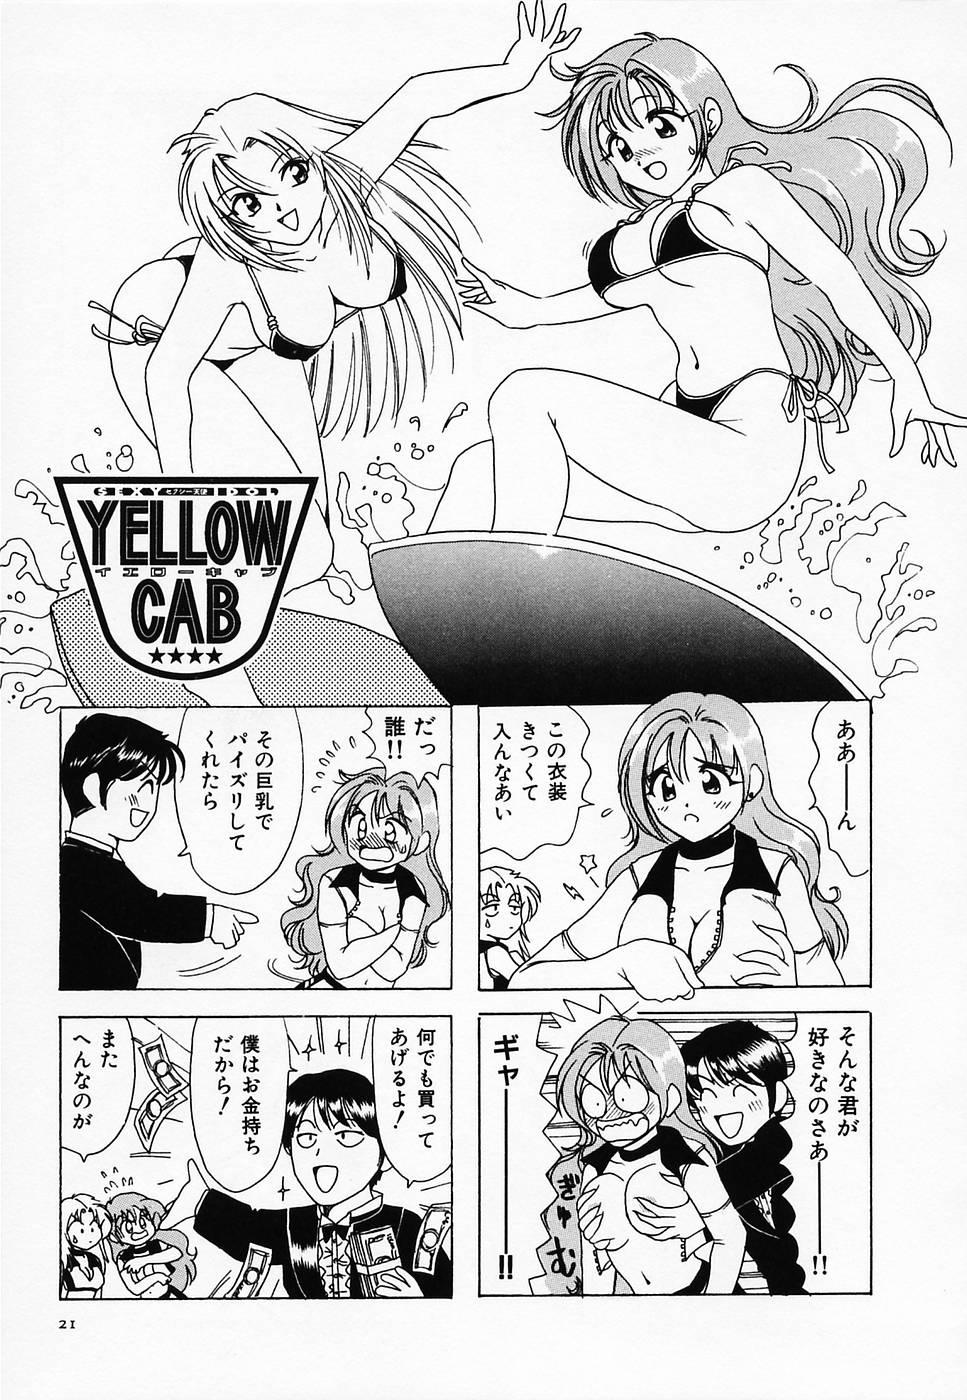 Sexy Tenshi Yellow Cab Vol. 2 22